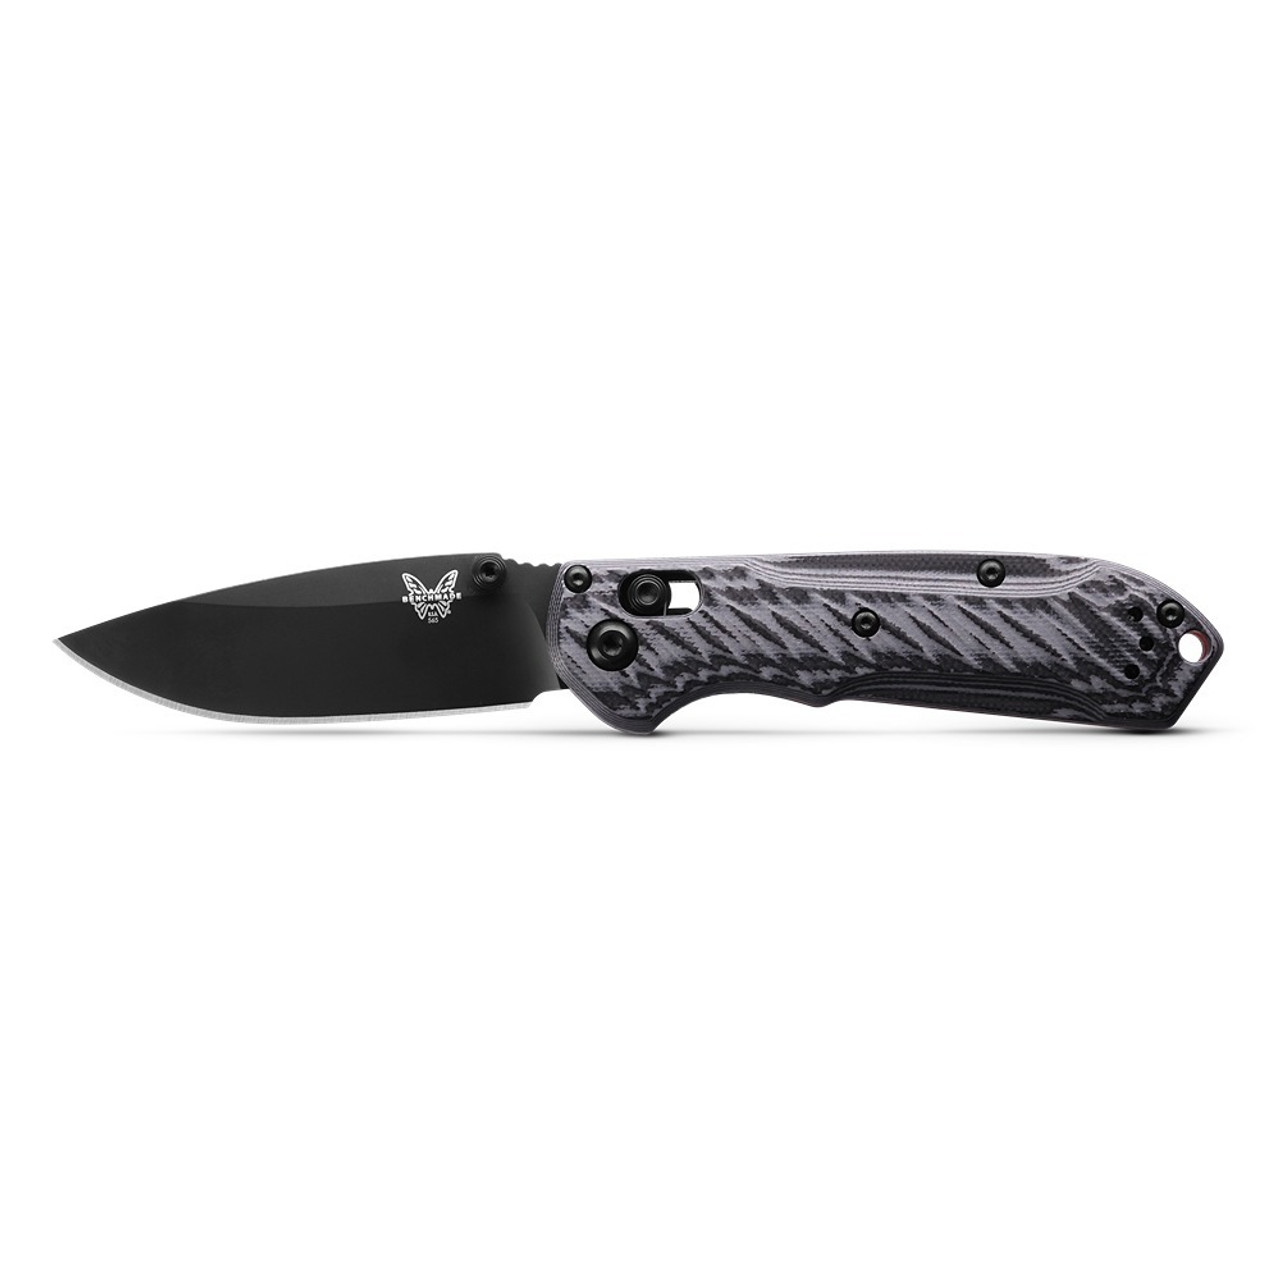 Benchmade Mini Freek Axis Folding Knife, Multicolour G10. Black Cerakote M4 Blade, Tricolour G10 Handle, Axis Lock, Made in U.S.A.